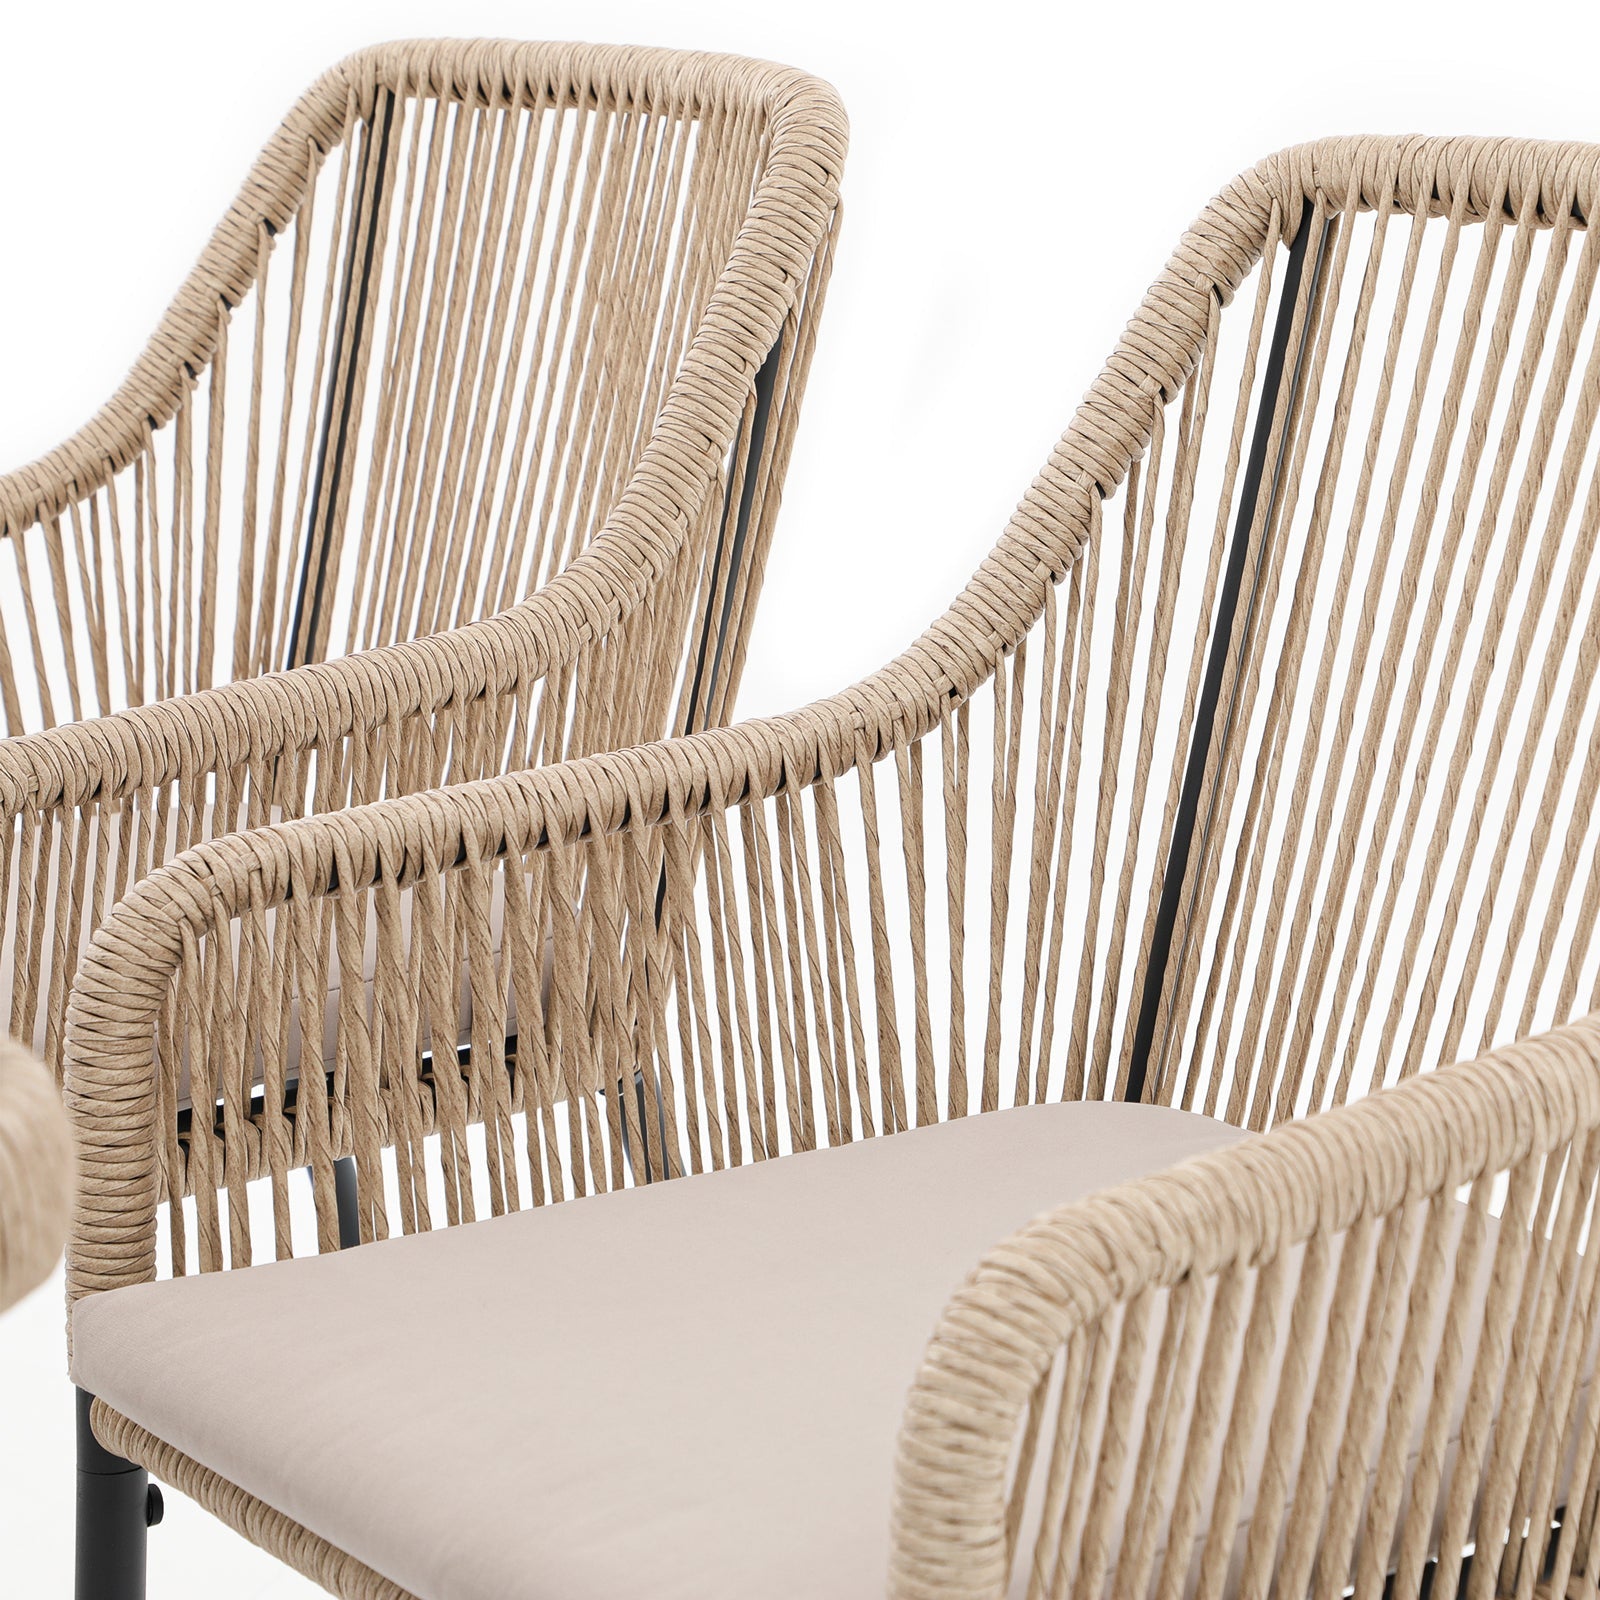 Hallerbos Bar Height Chair with natural rattan design, detail drawing- Jardina Furniture#Color_Natural